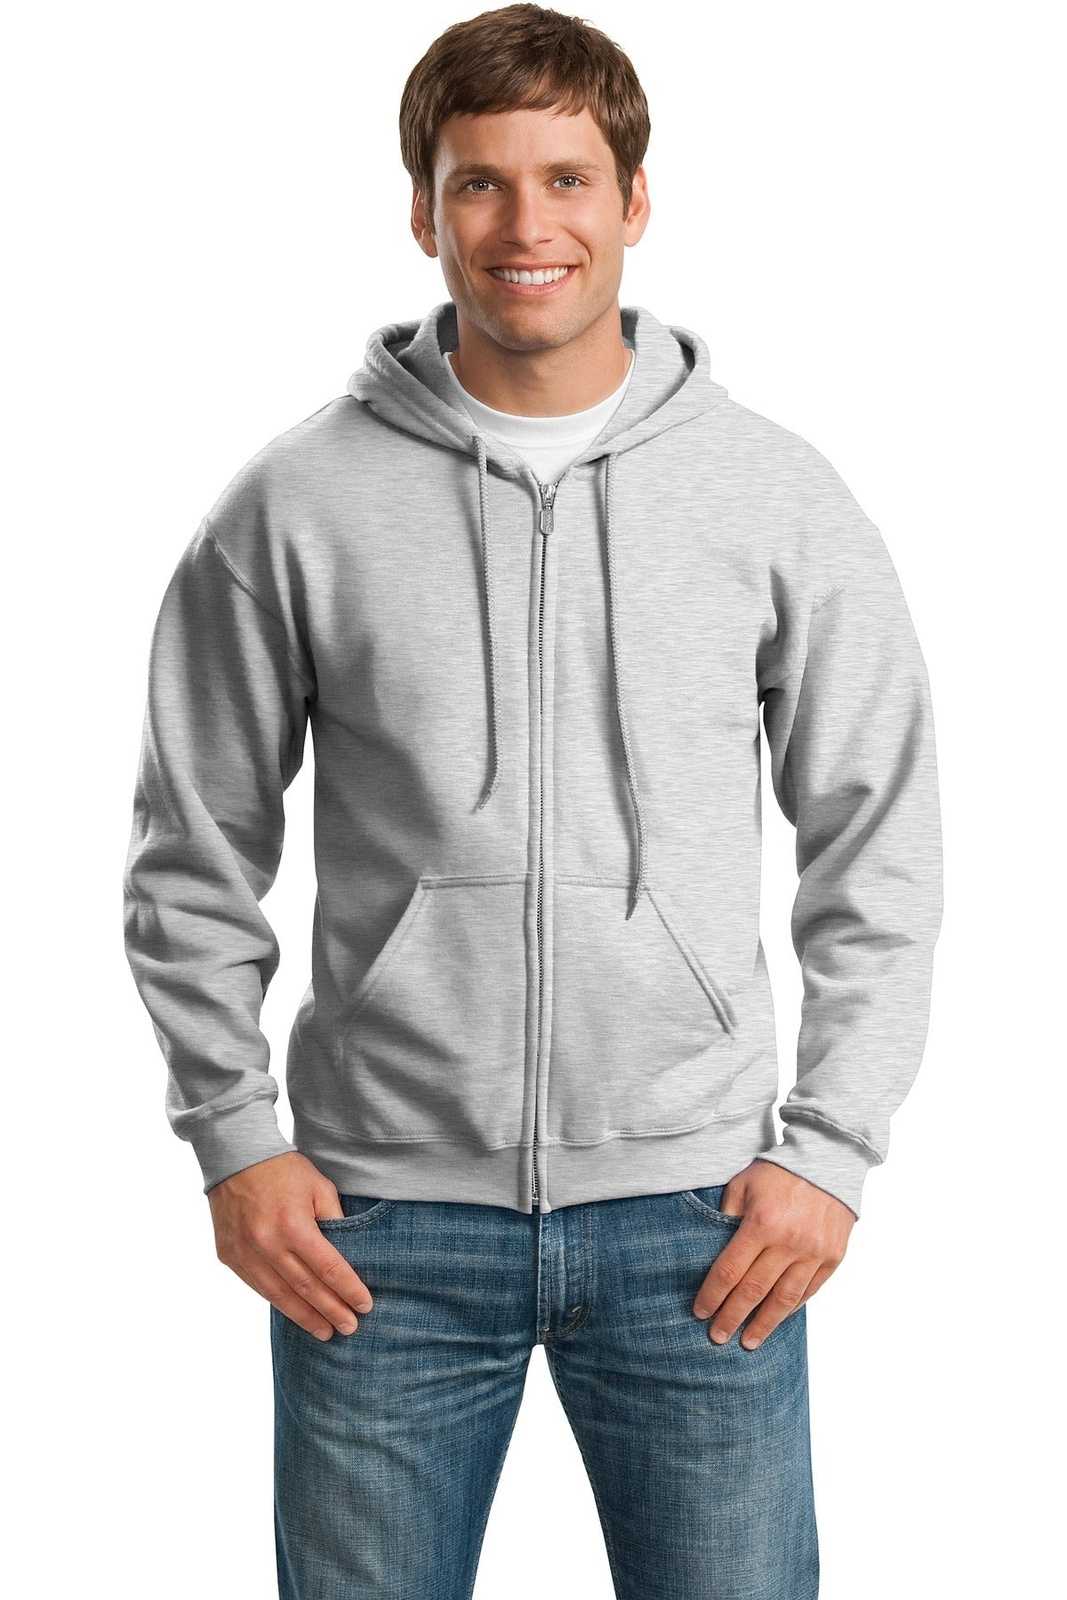 Gildan 18600 Heavy Blend Full-Zip Hooded Sweatshirt - Ash Gray - HIT a Double